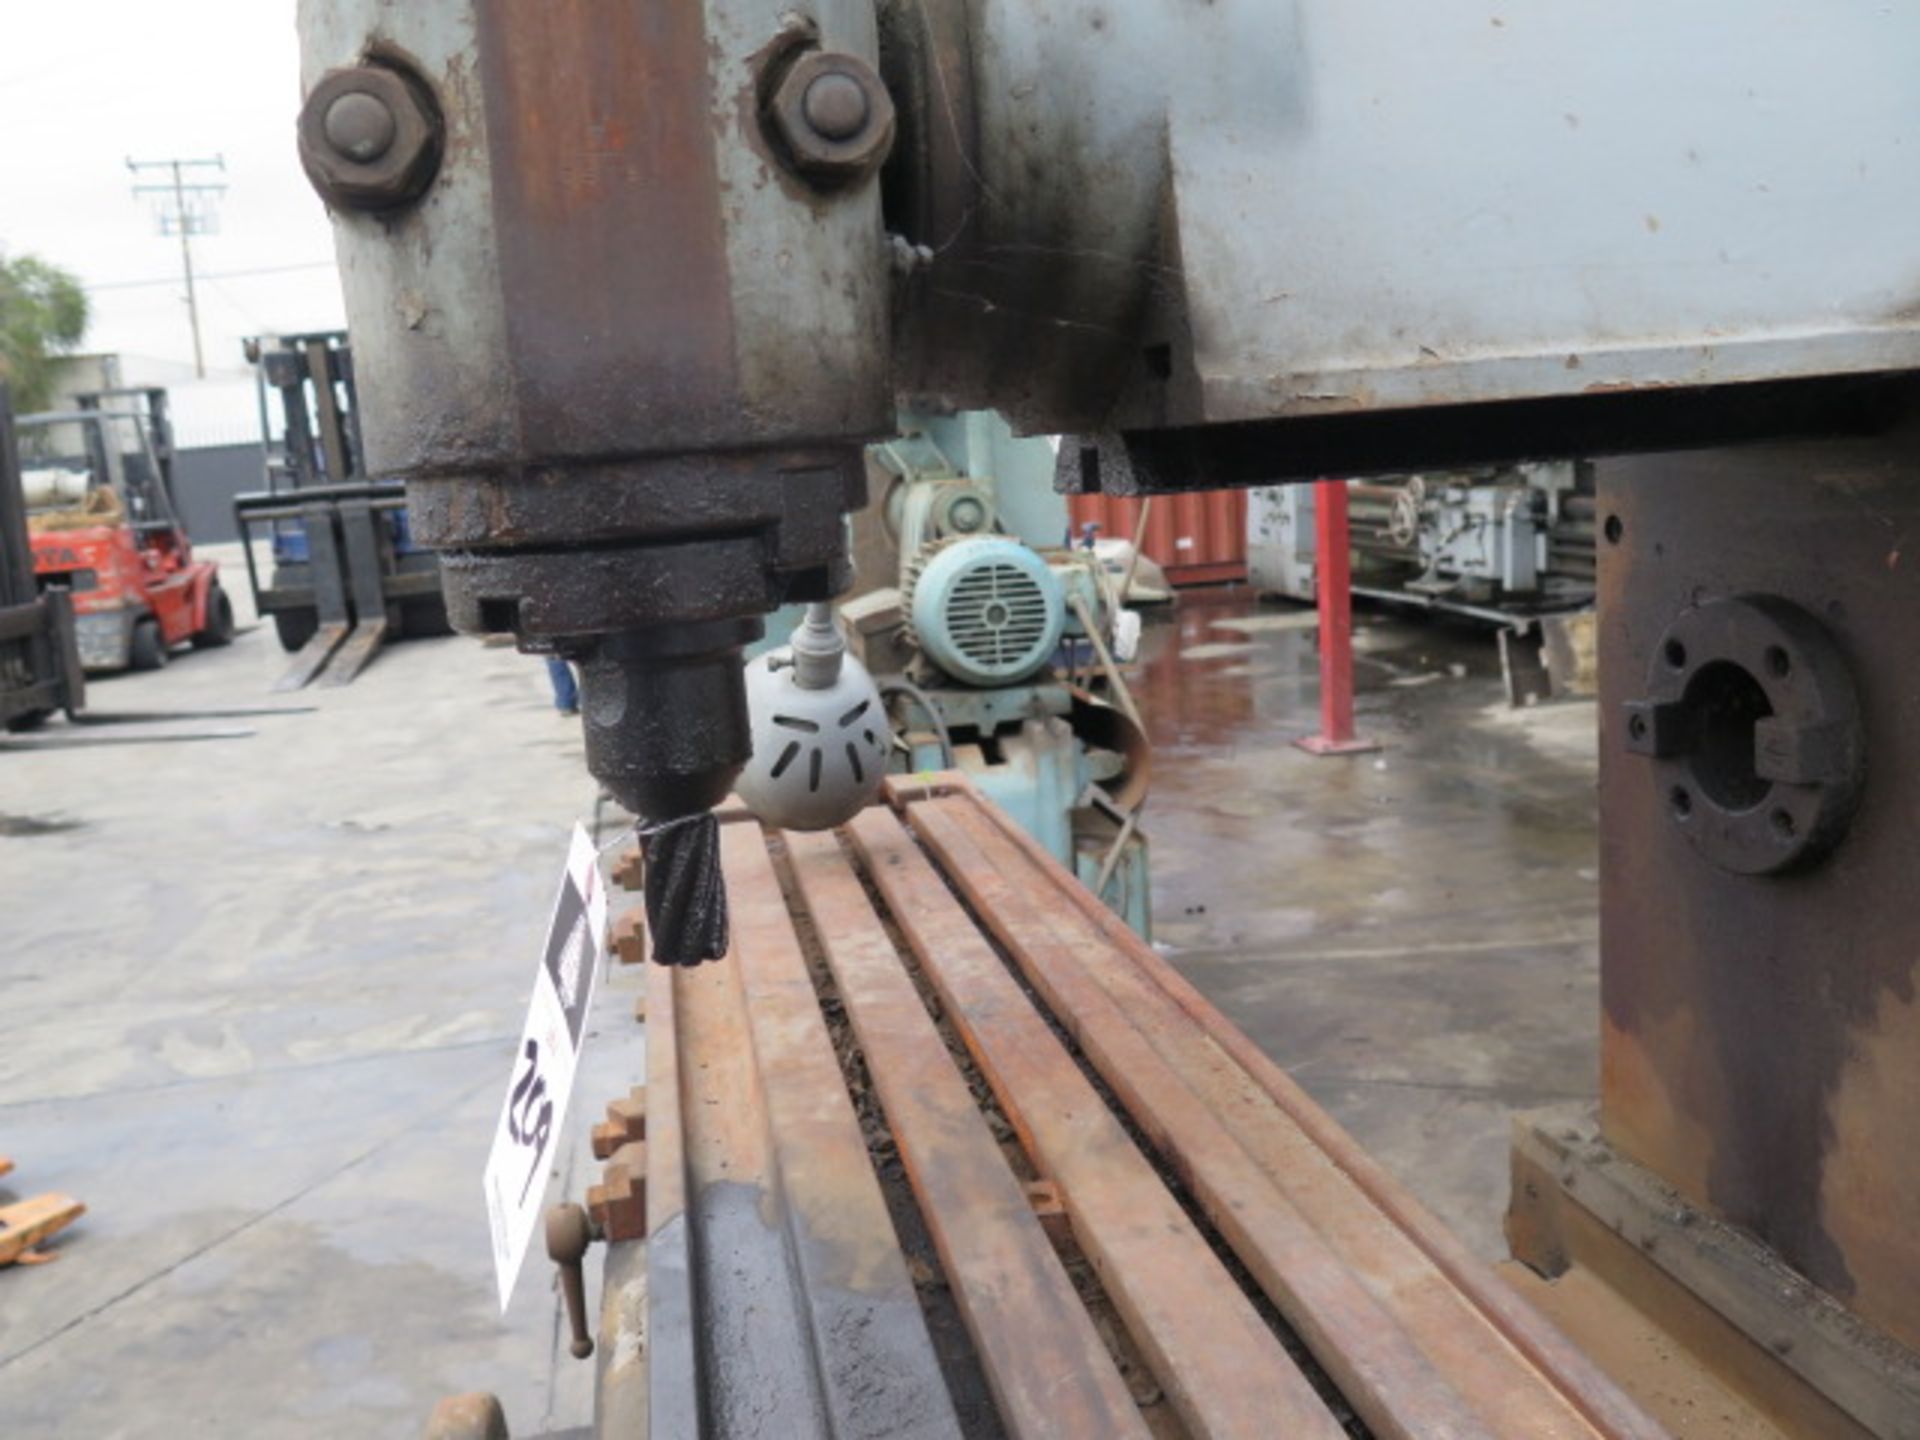 Kearney & Trecker Milwaukee mdl. 5HP-2CH Universal Mill 2/ 25-1500 Horizontal RPM, 40-1200 - Image 3 of 4